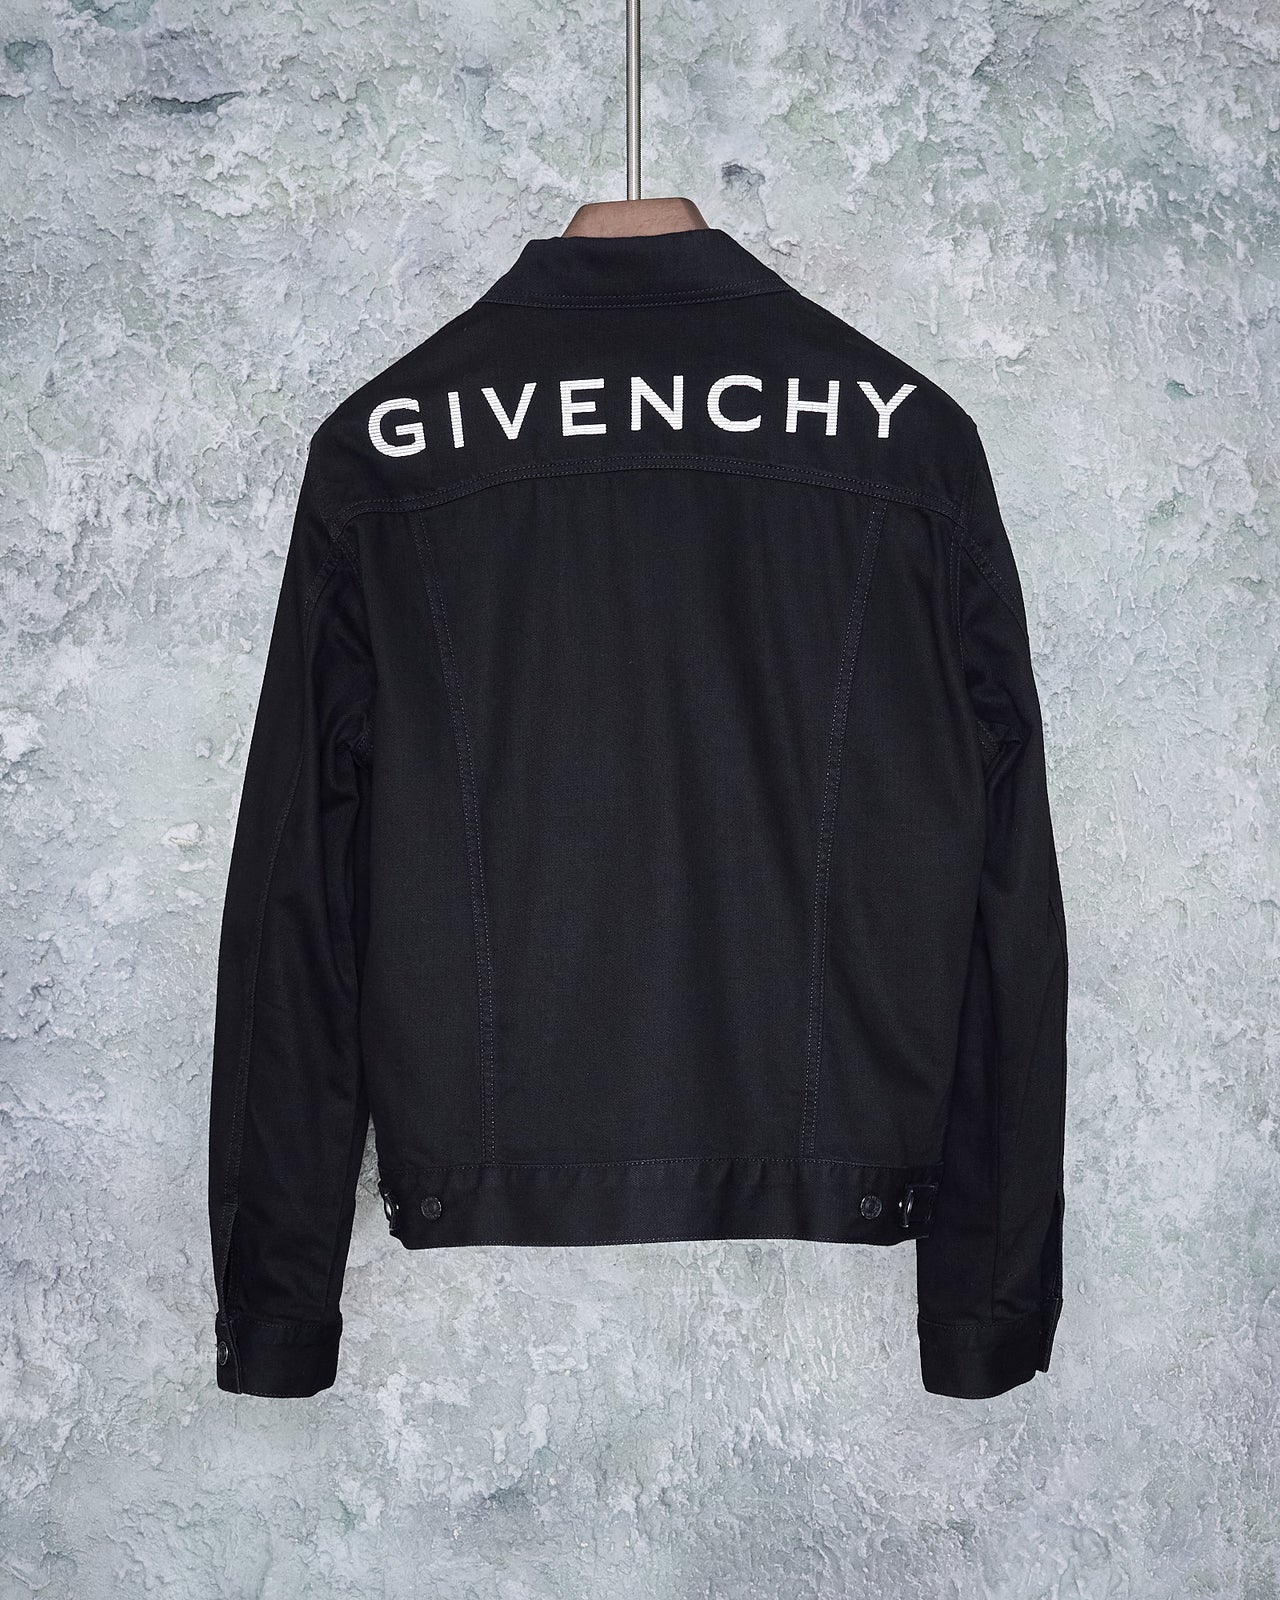 Givenchy Givenchy back logo denim Jacket